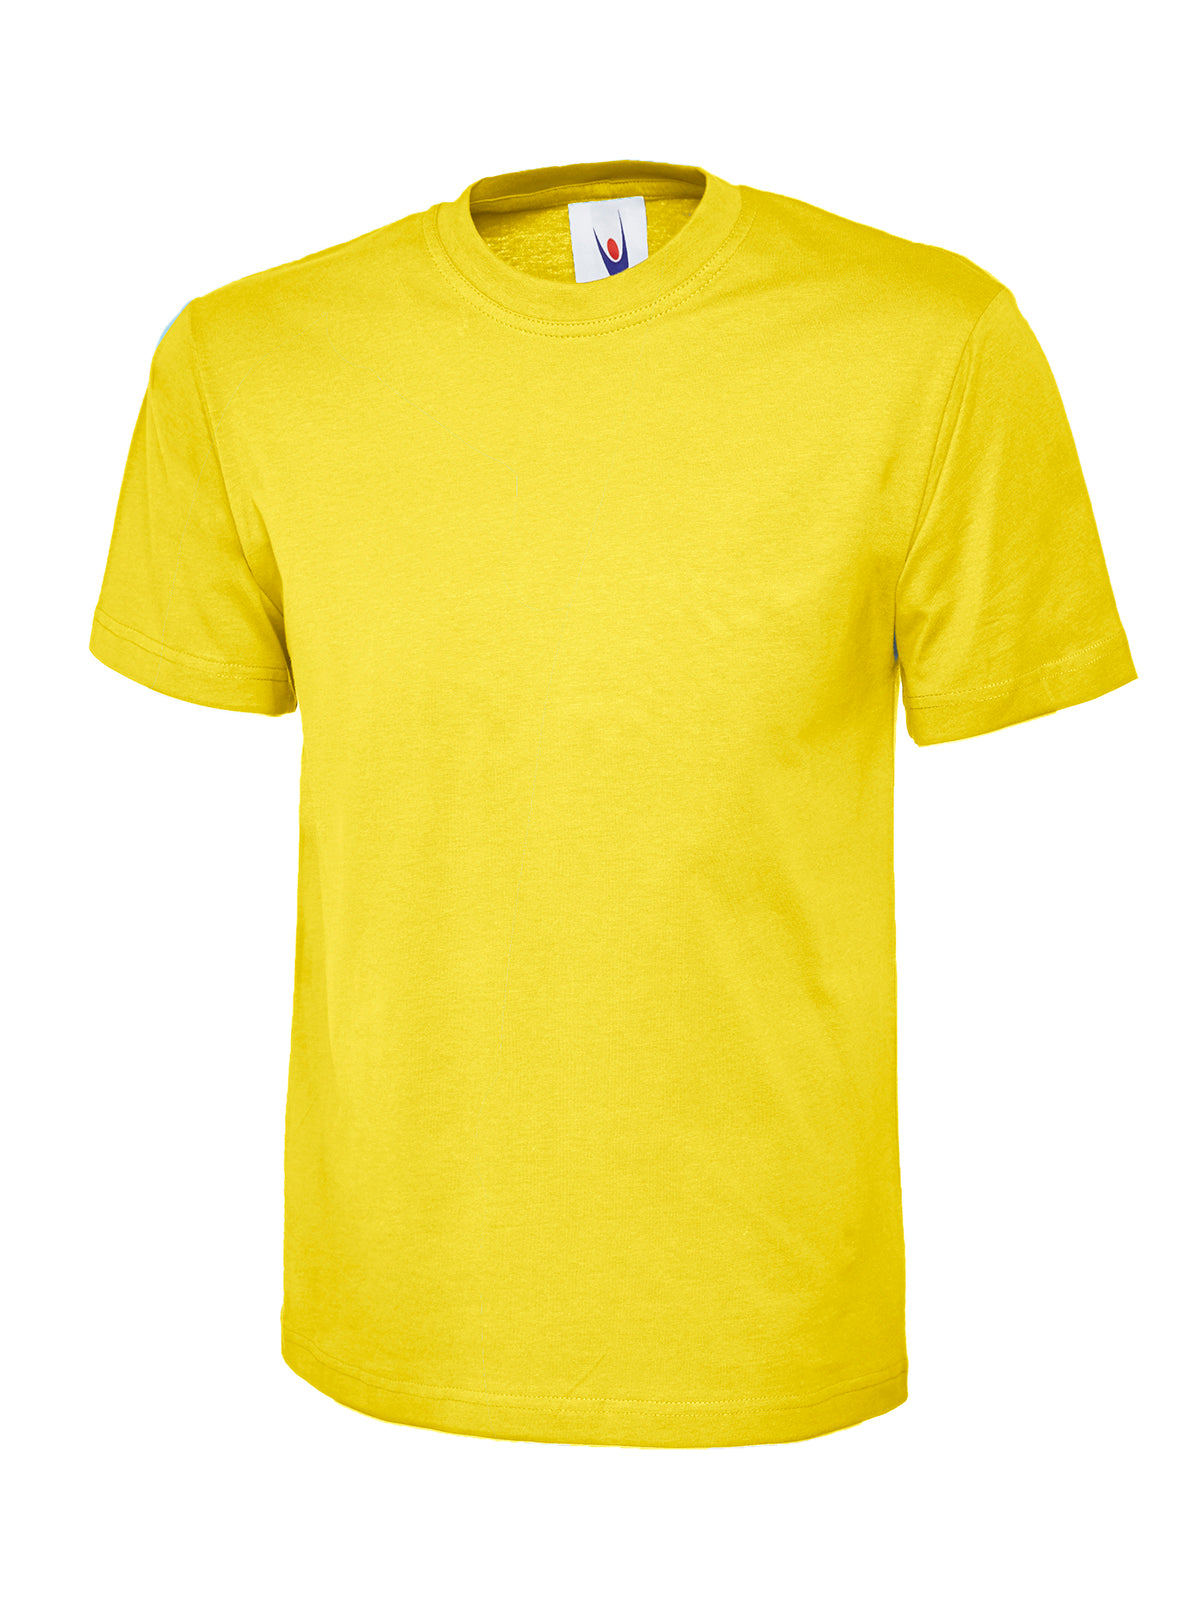 Uneek Childrens T-shirt UC306 - Yellow